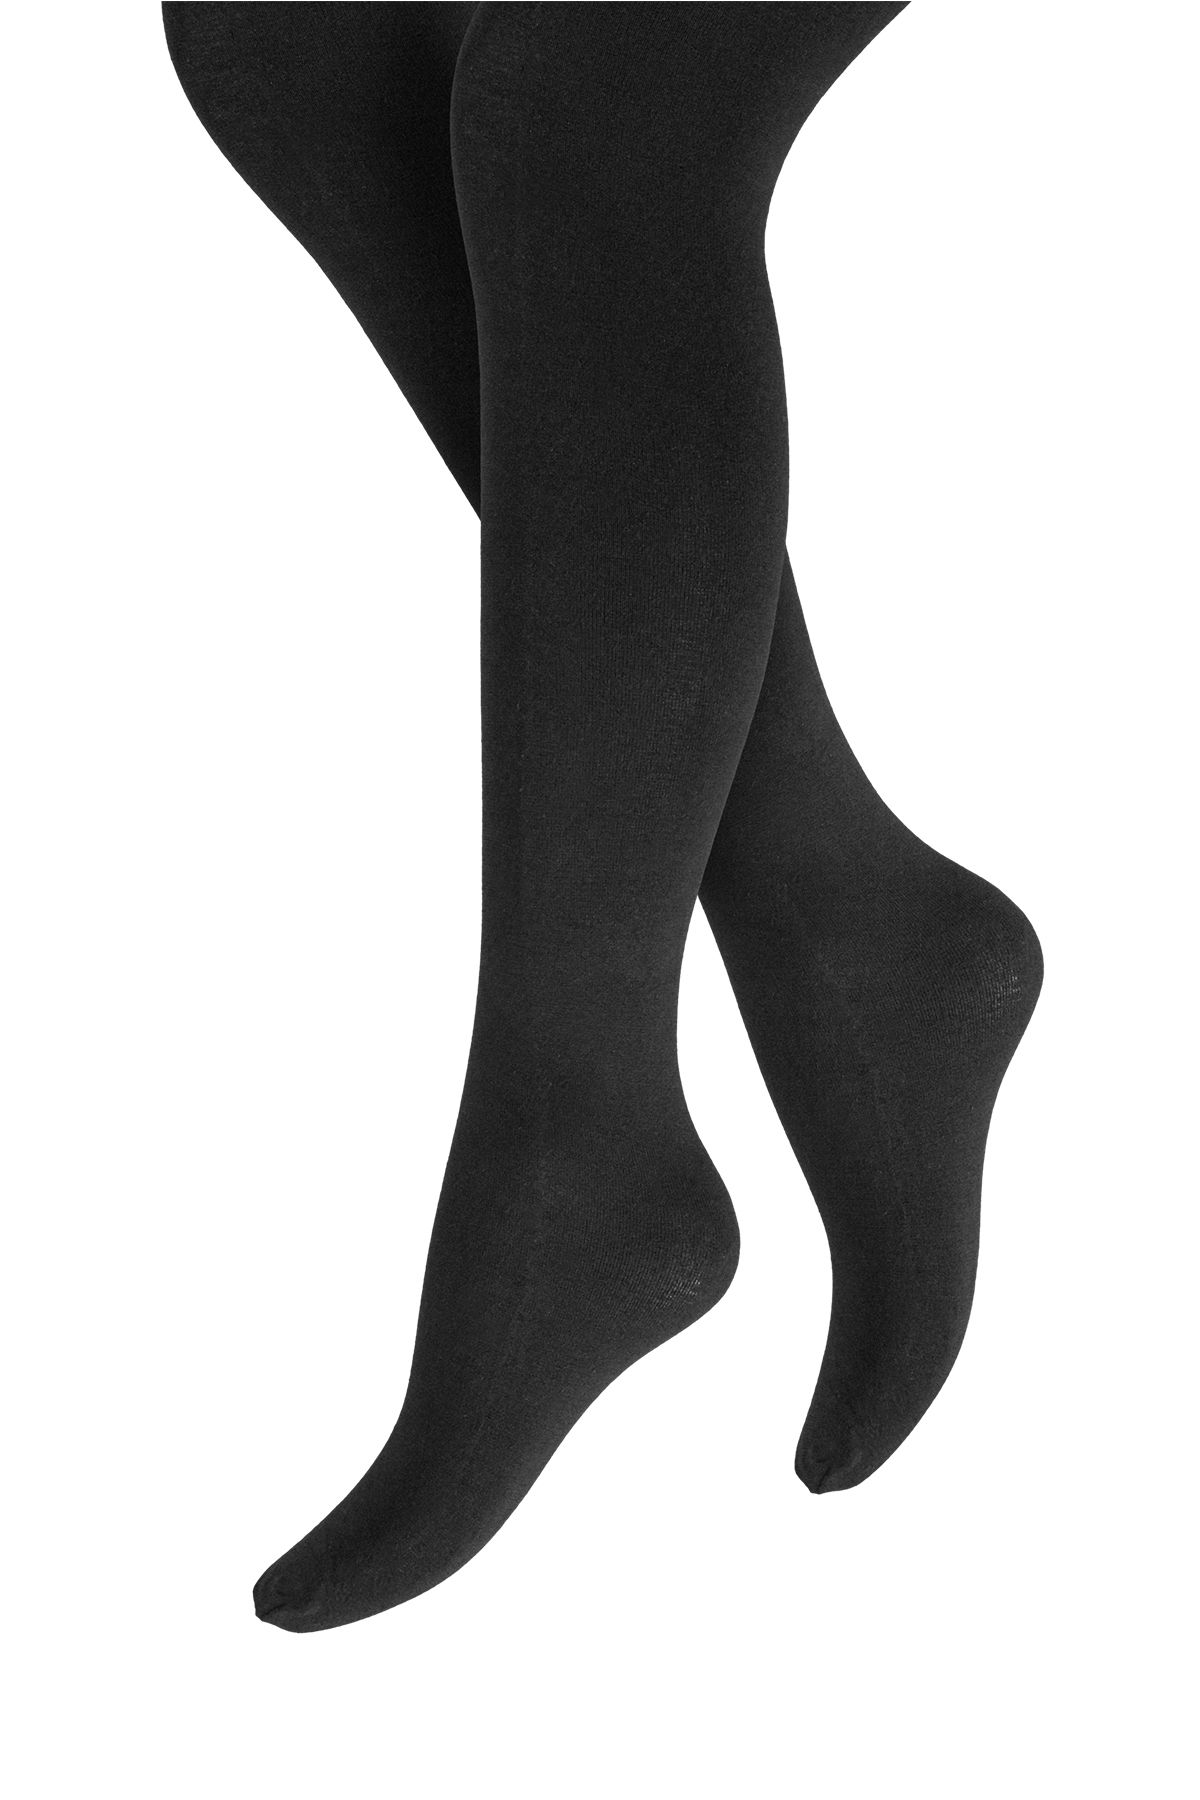 Penti Siyah Çocuk Bambu Külotlu Çorap